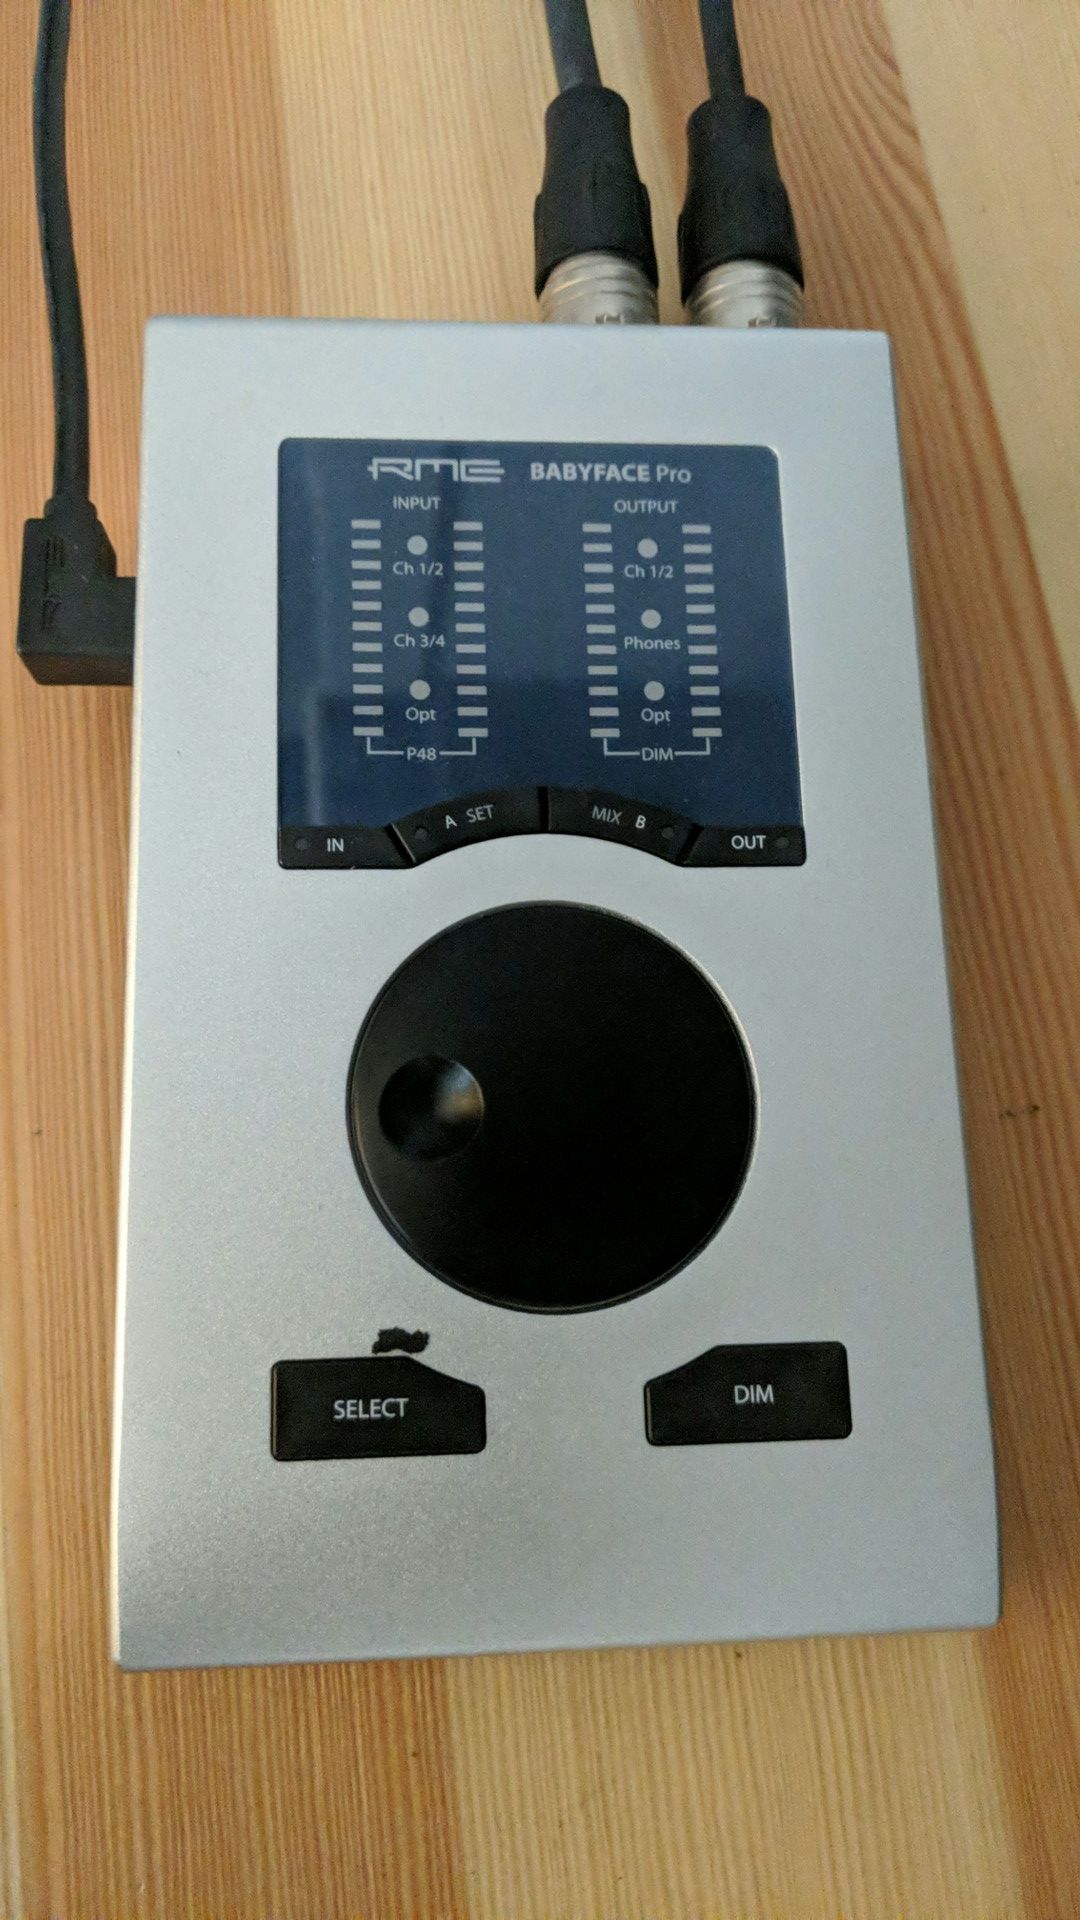 RMC Babyface Pro Audio Interface